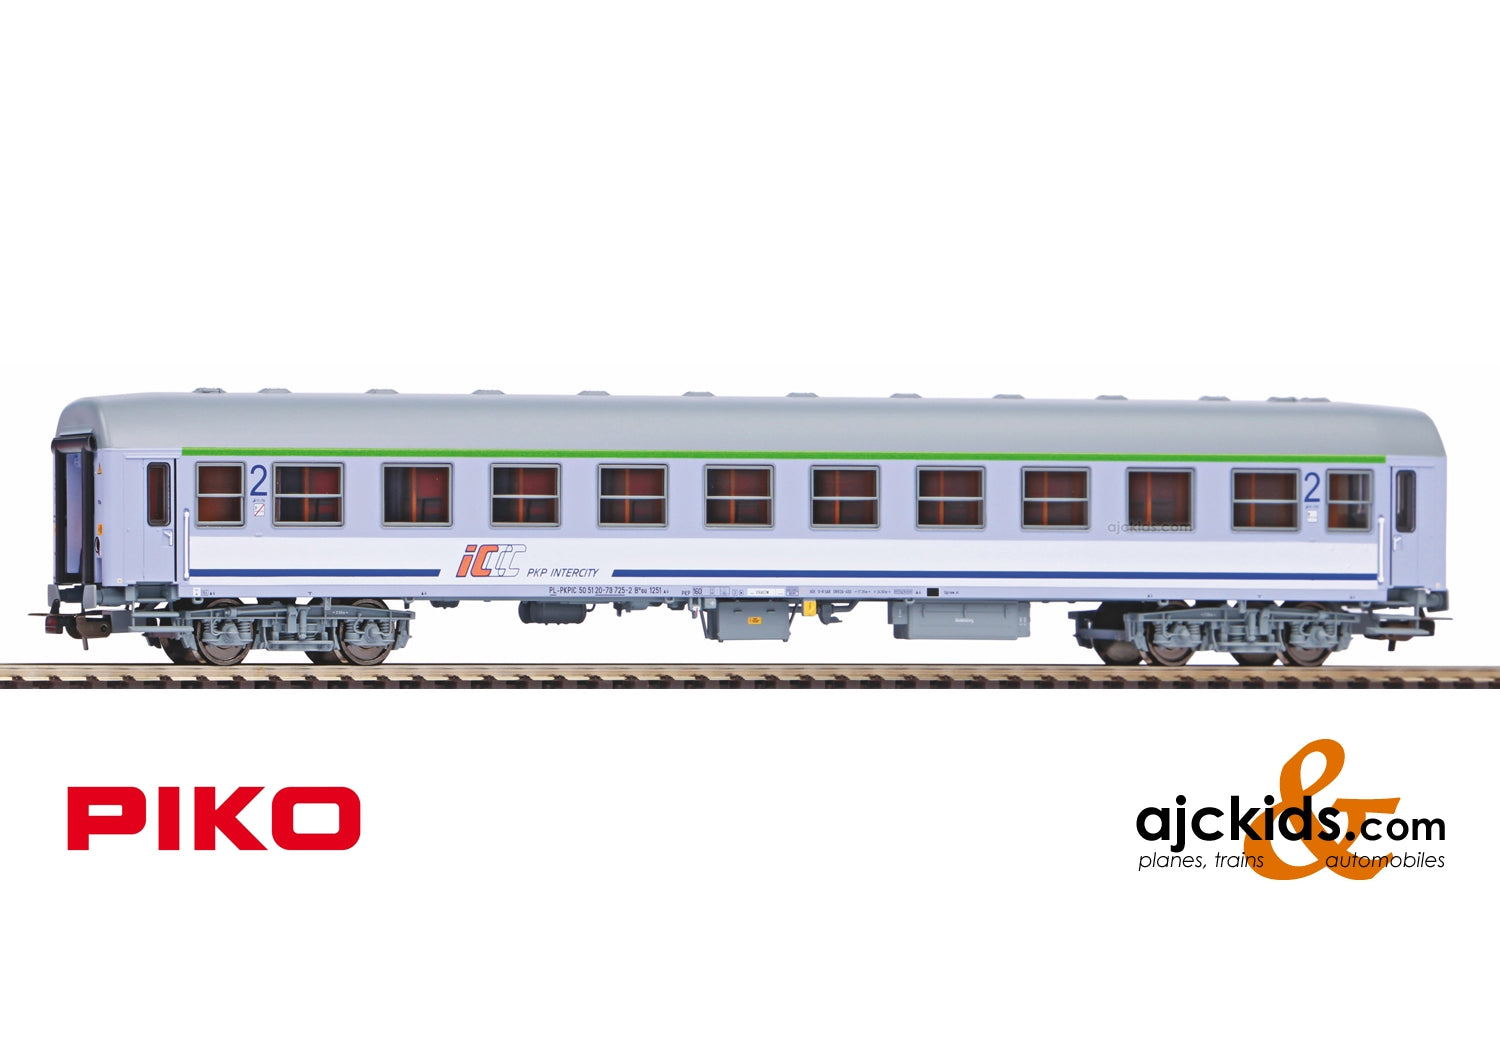 Piko 97604 - IC Passenger Car 111A PKP VI